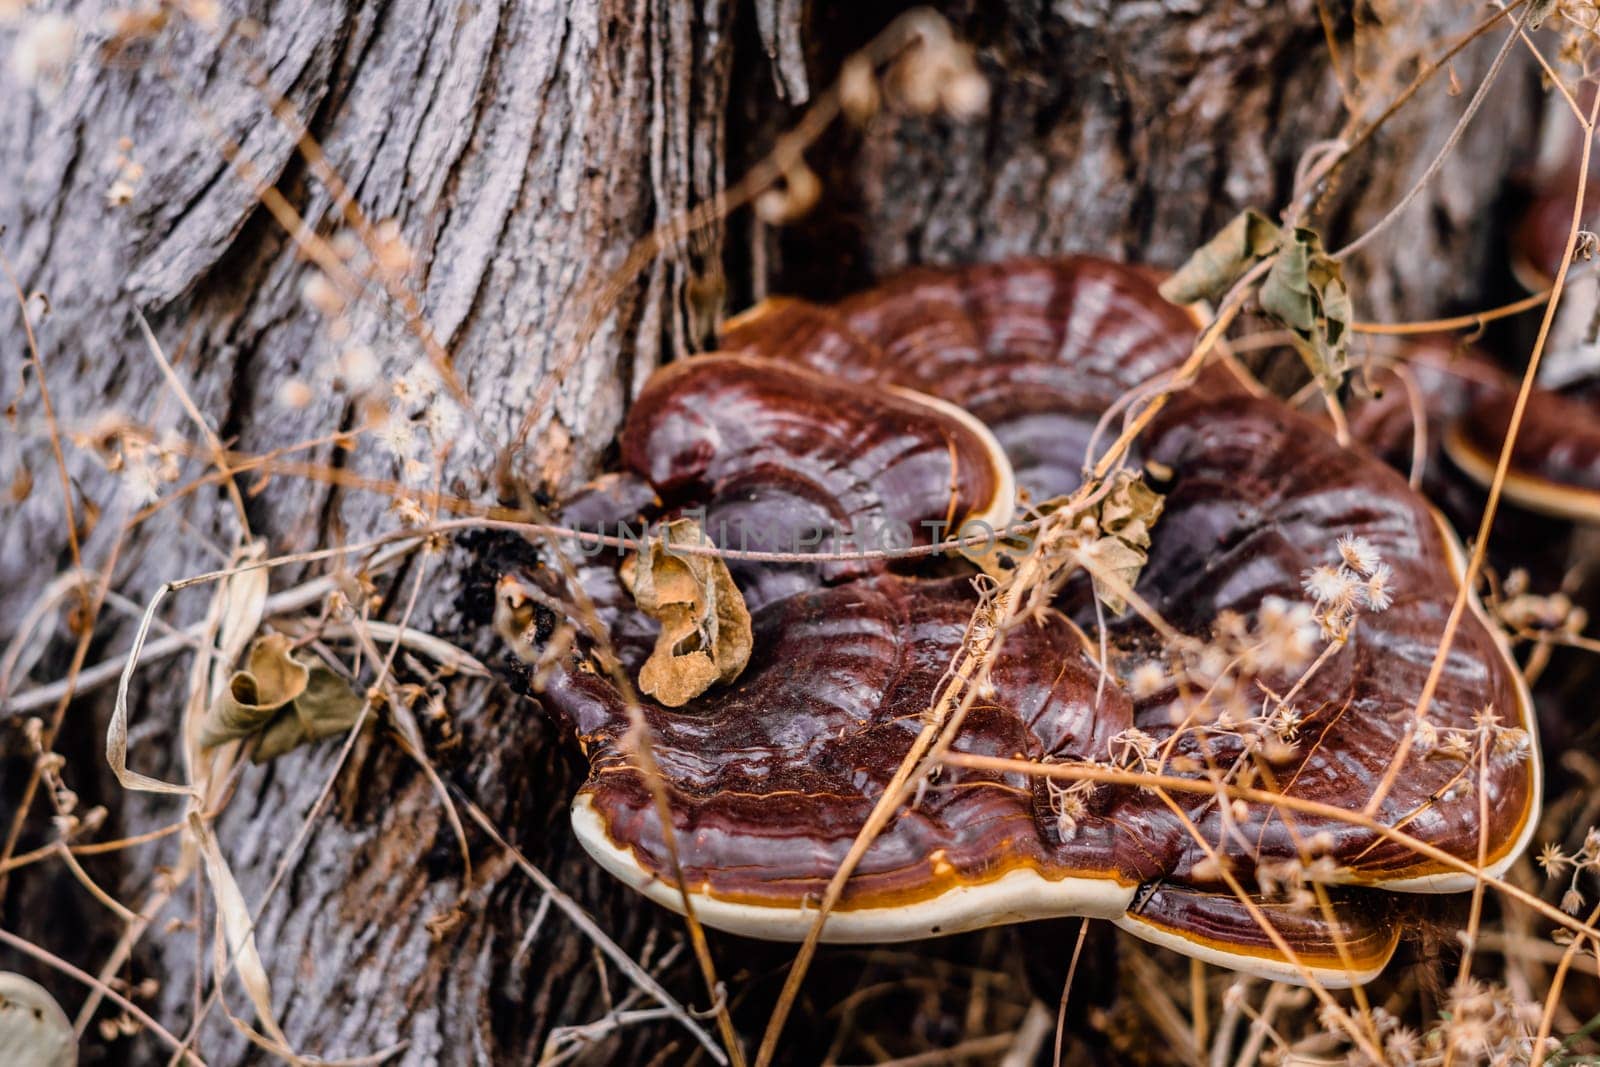 Magic of wild flora, unusually bright shiny mushrooms on stump tree, pleasant nature texture calm dark light brown background by nandrey85